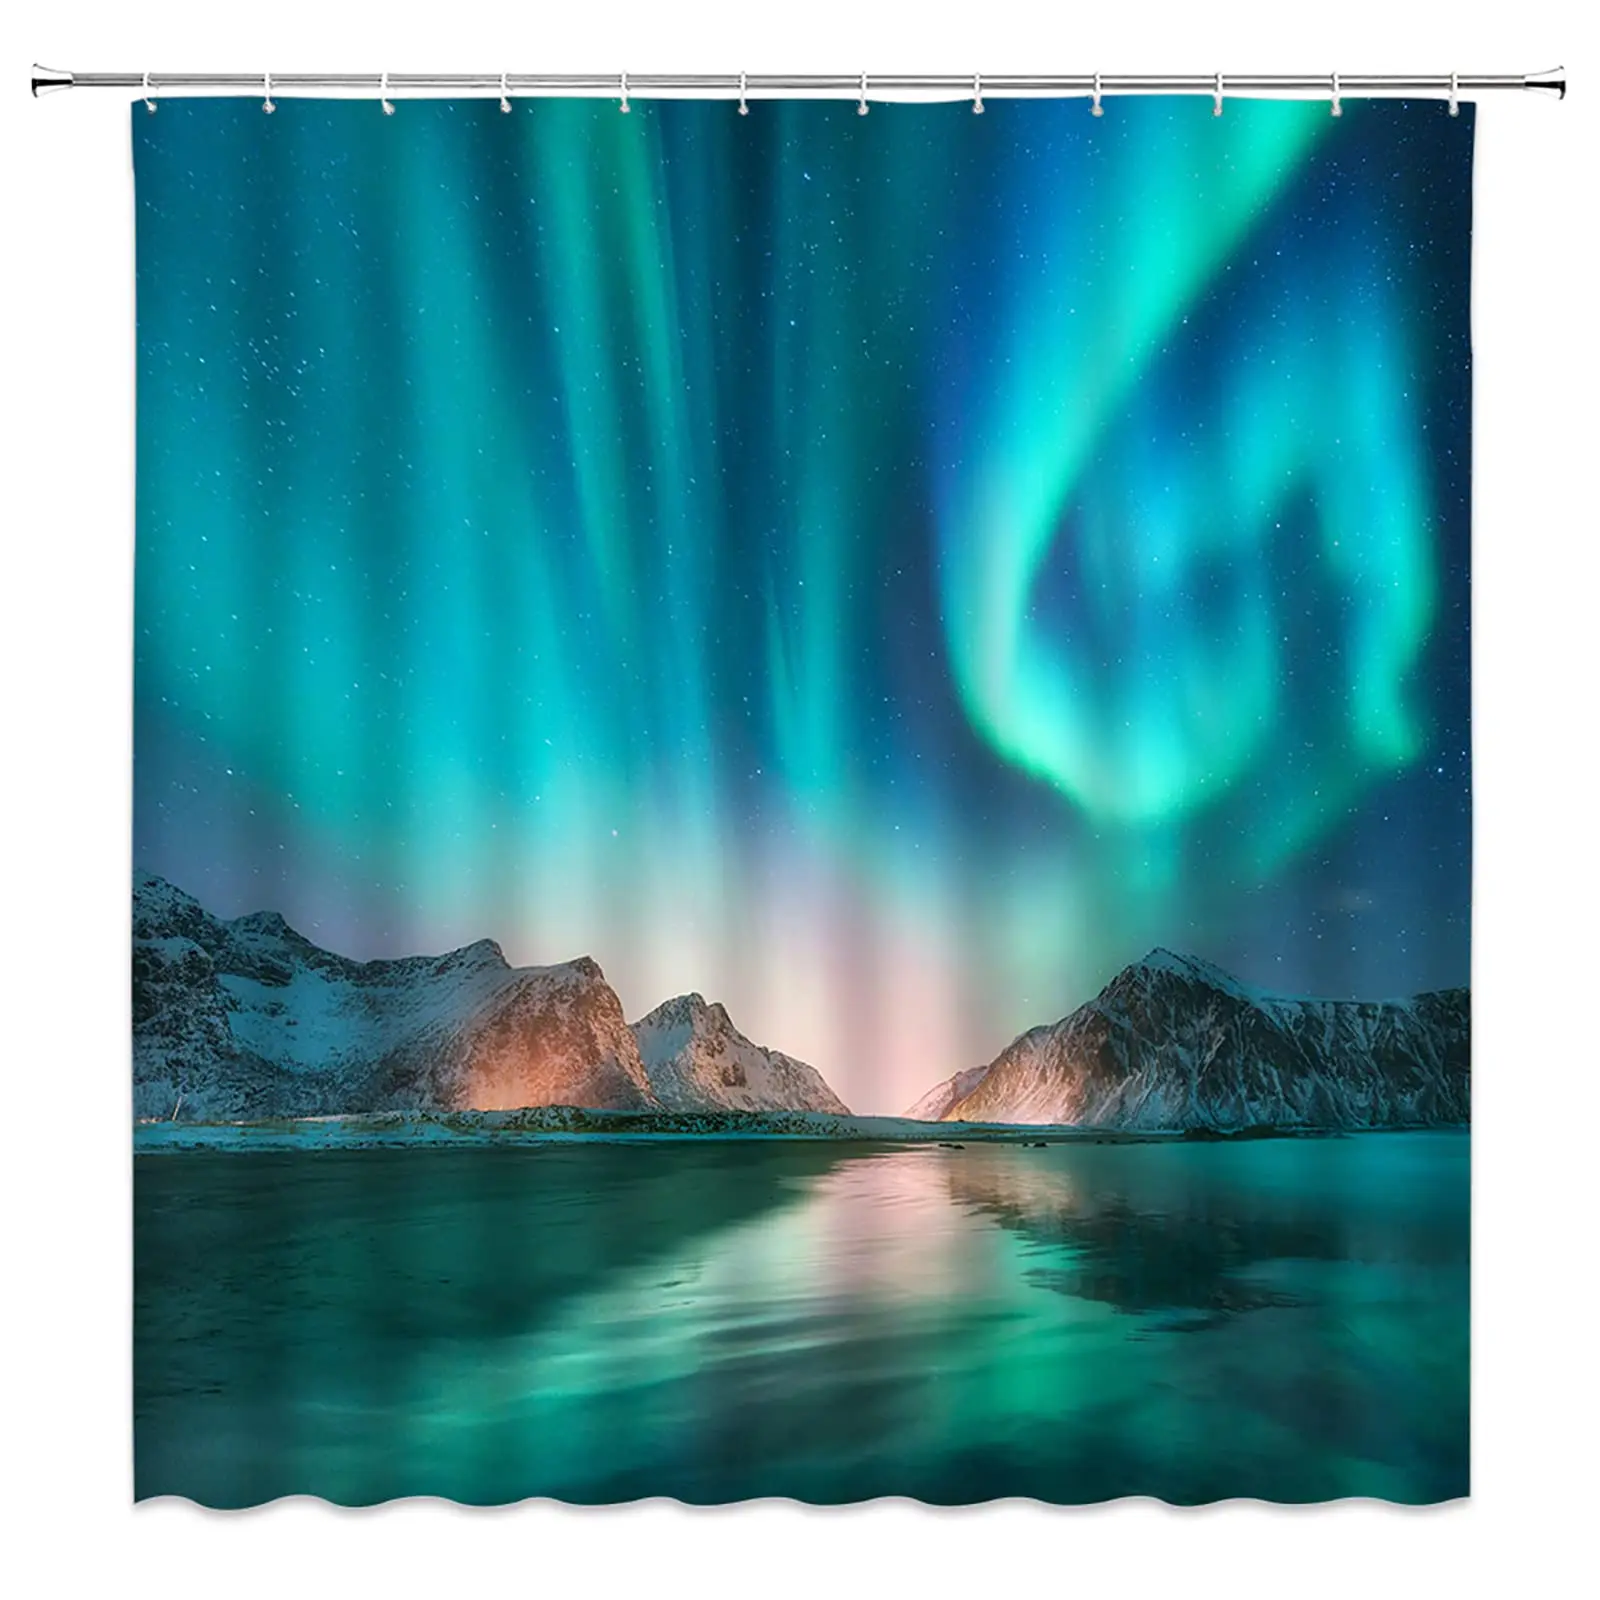 

Aurora Borealis Shower Curtain, Exquisite Atmosphere Solar Starry Sky Calming Night Image Cloth Bathroom Decor Set with Hooks